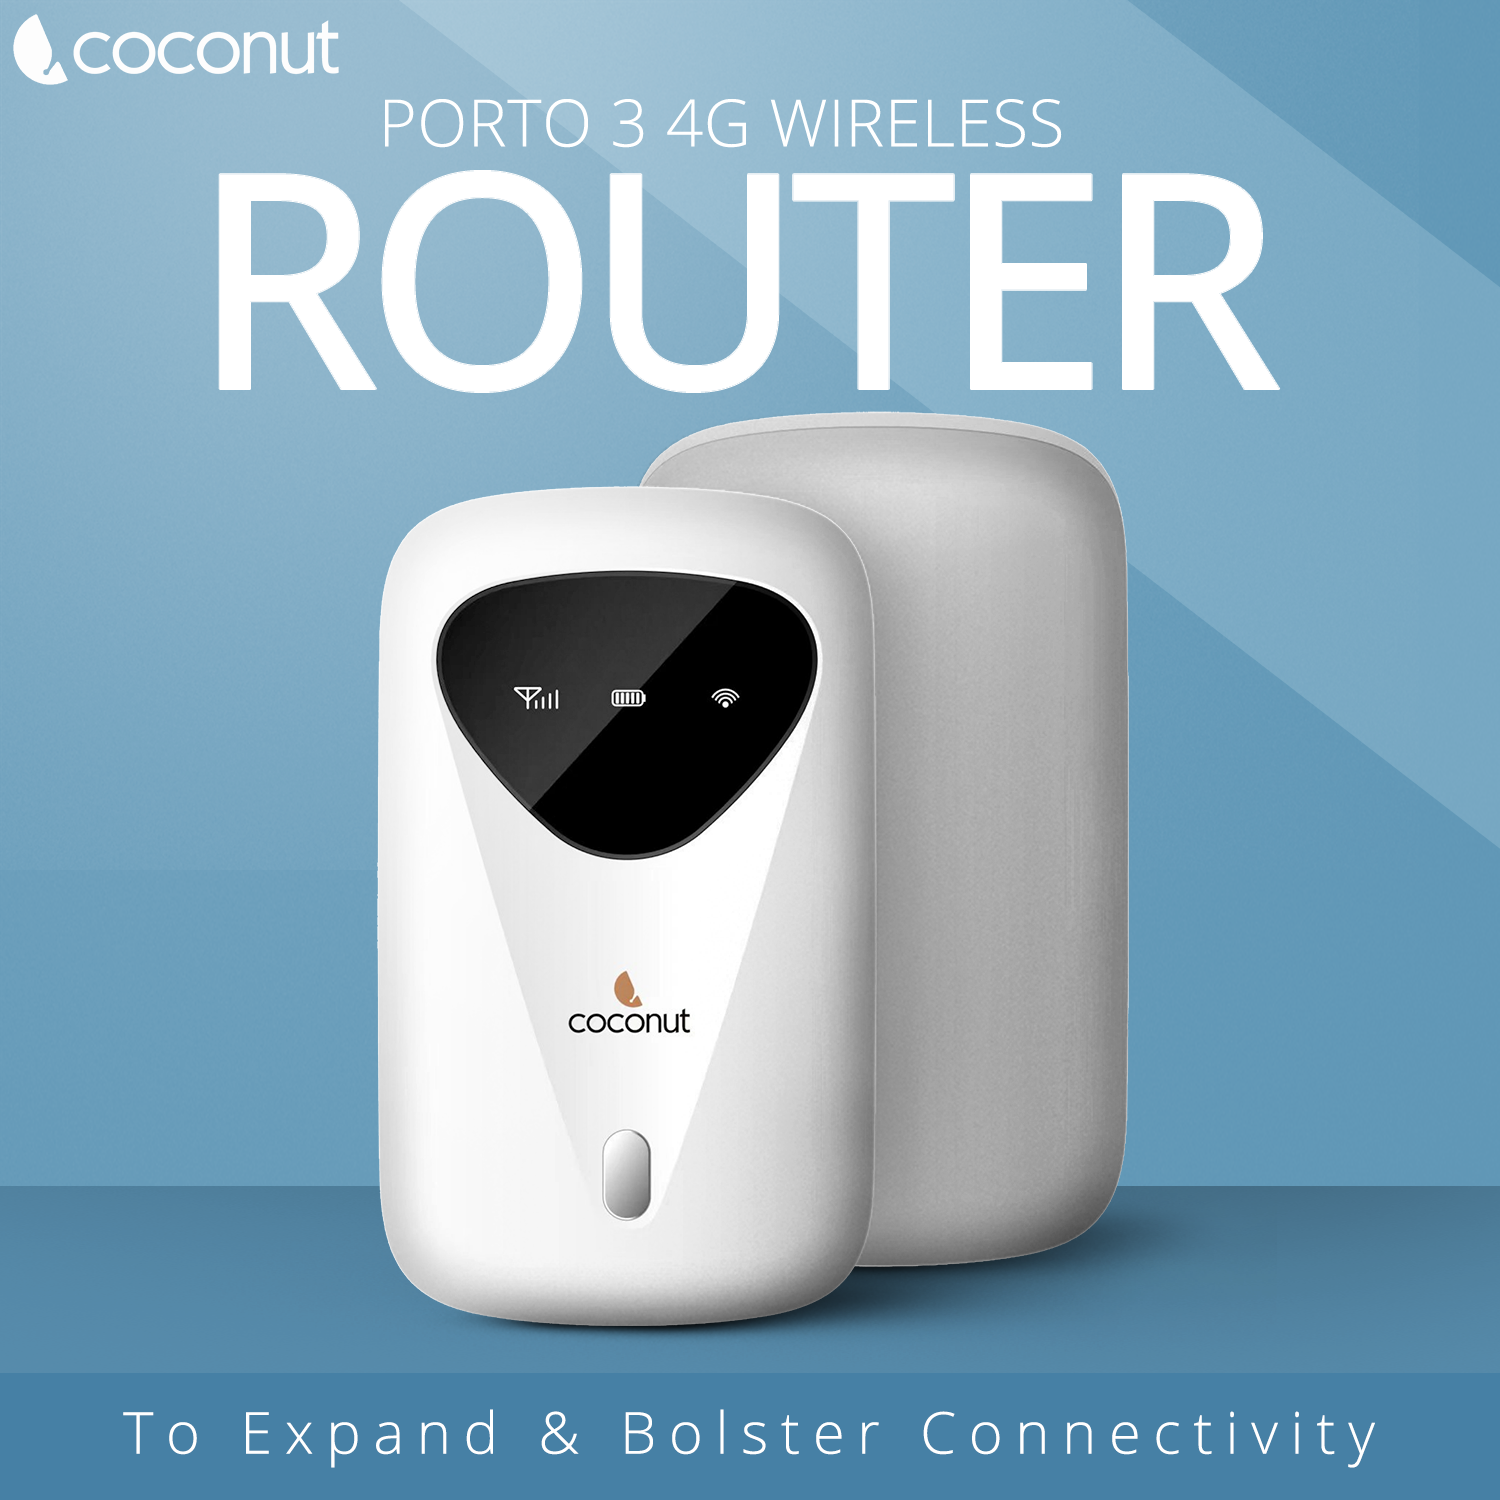 Porto 3 4G Wireless Router, Built In 2700mAh Battery